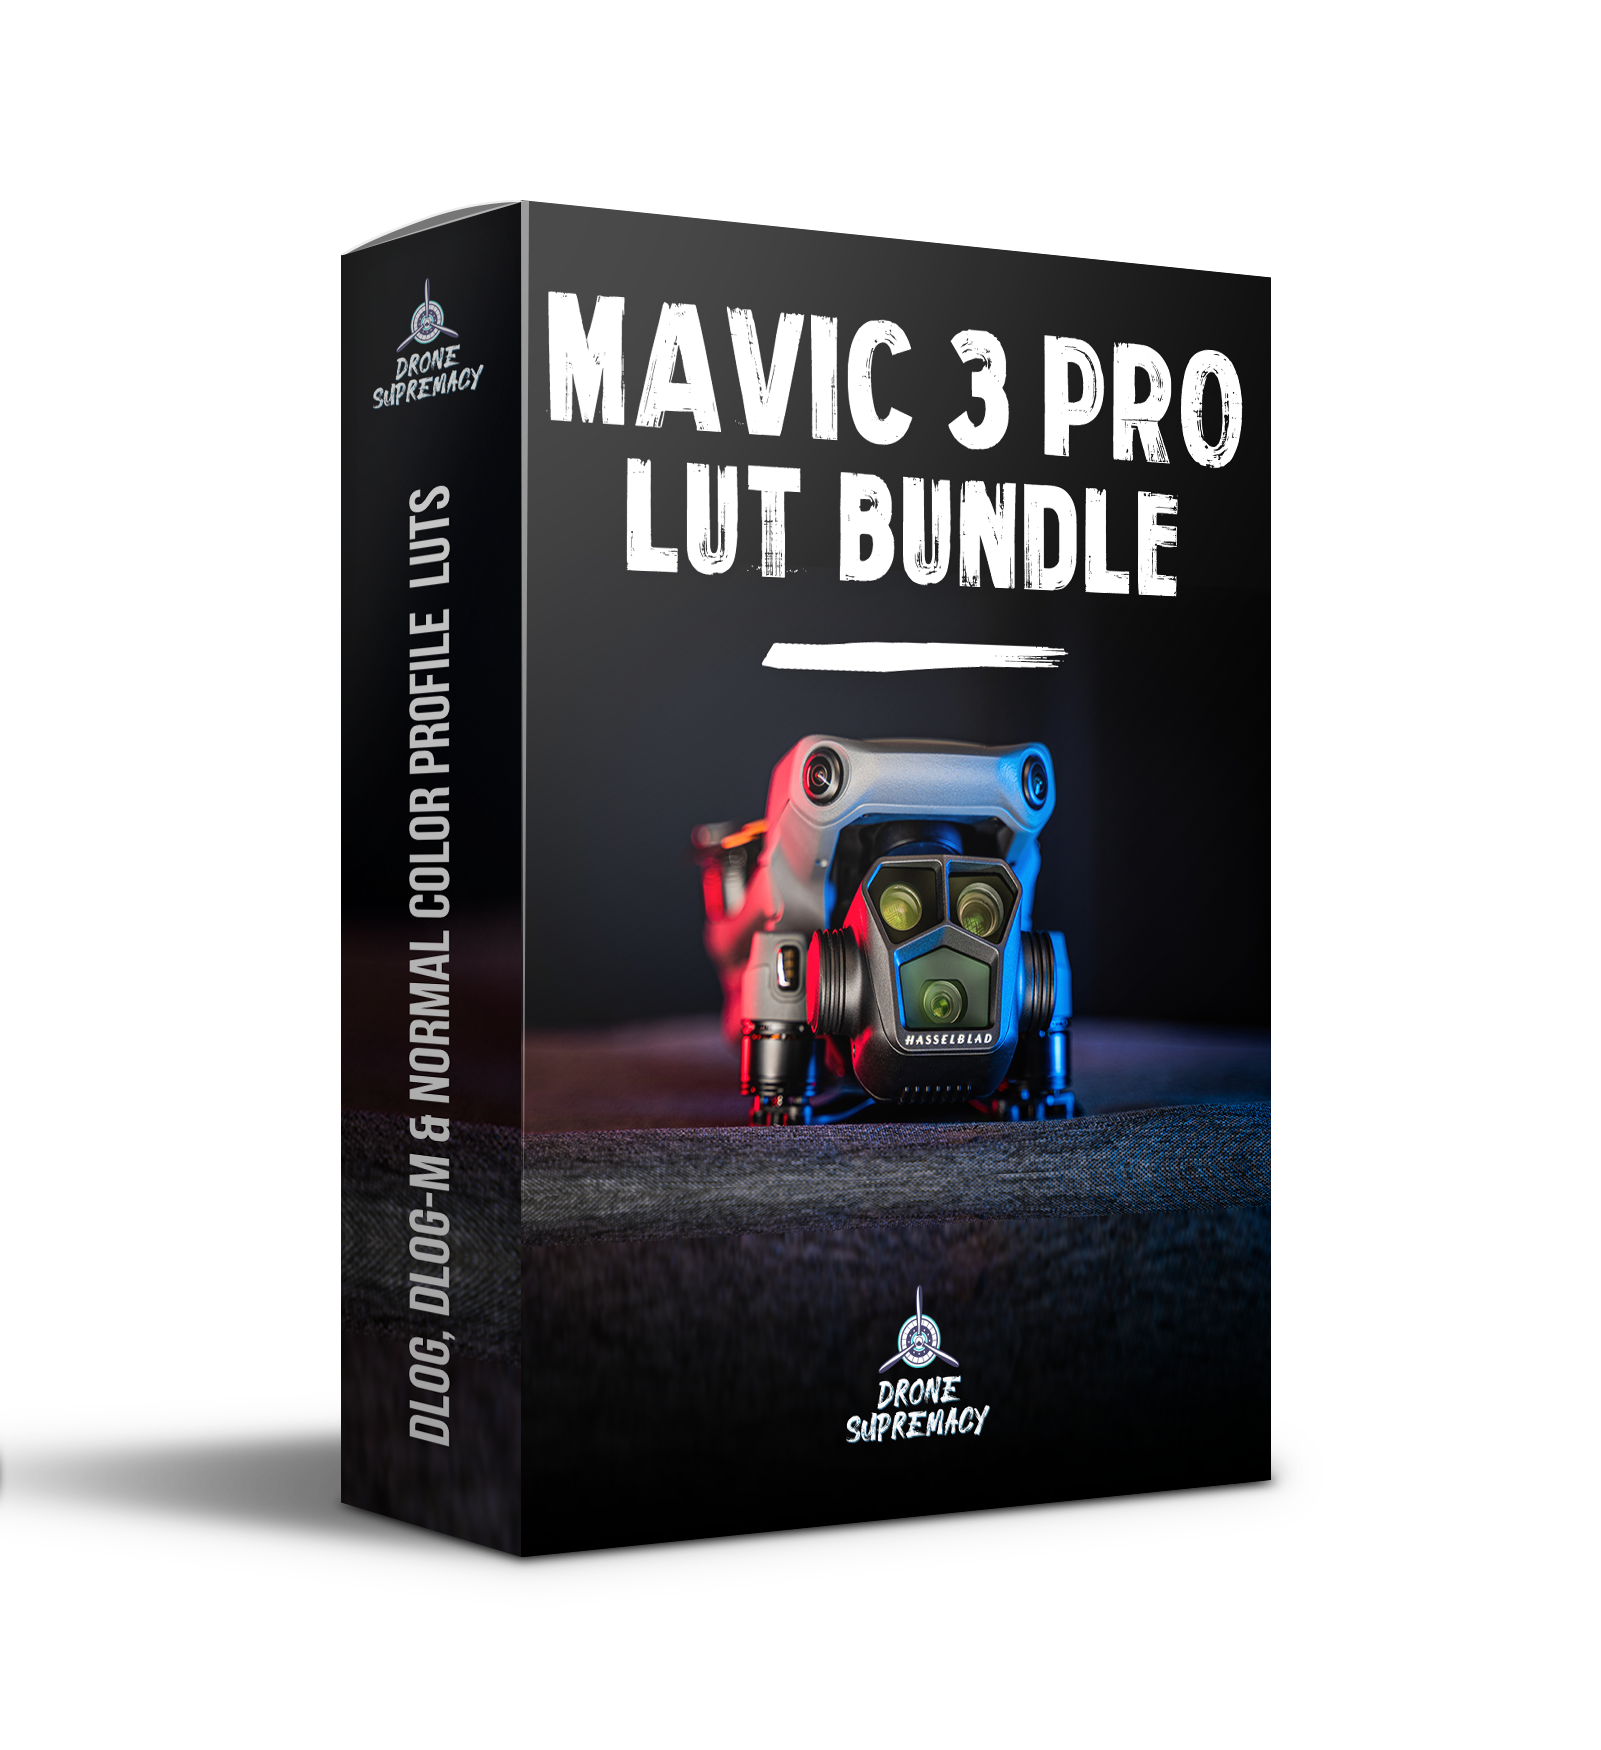 DJI Mavic 3 Pro LUT Bundle (Pack of 3) –